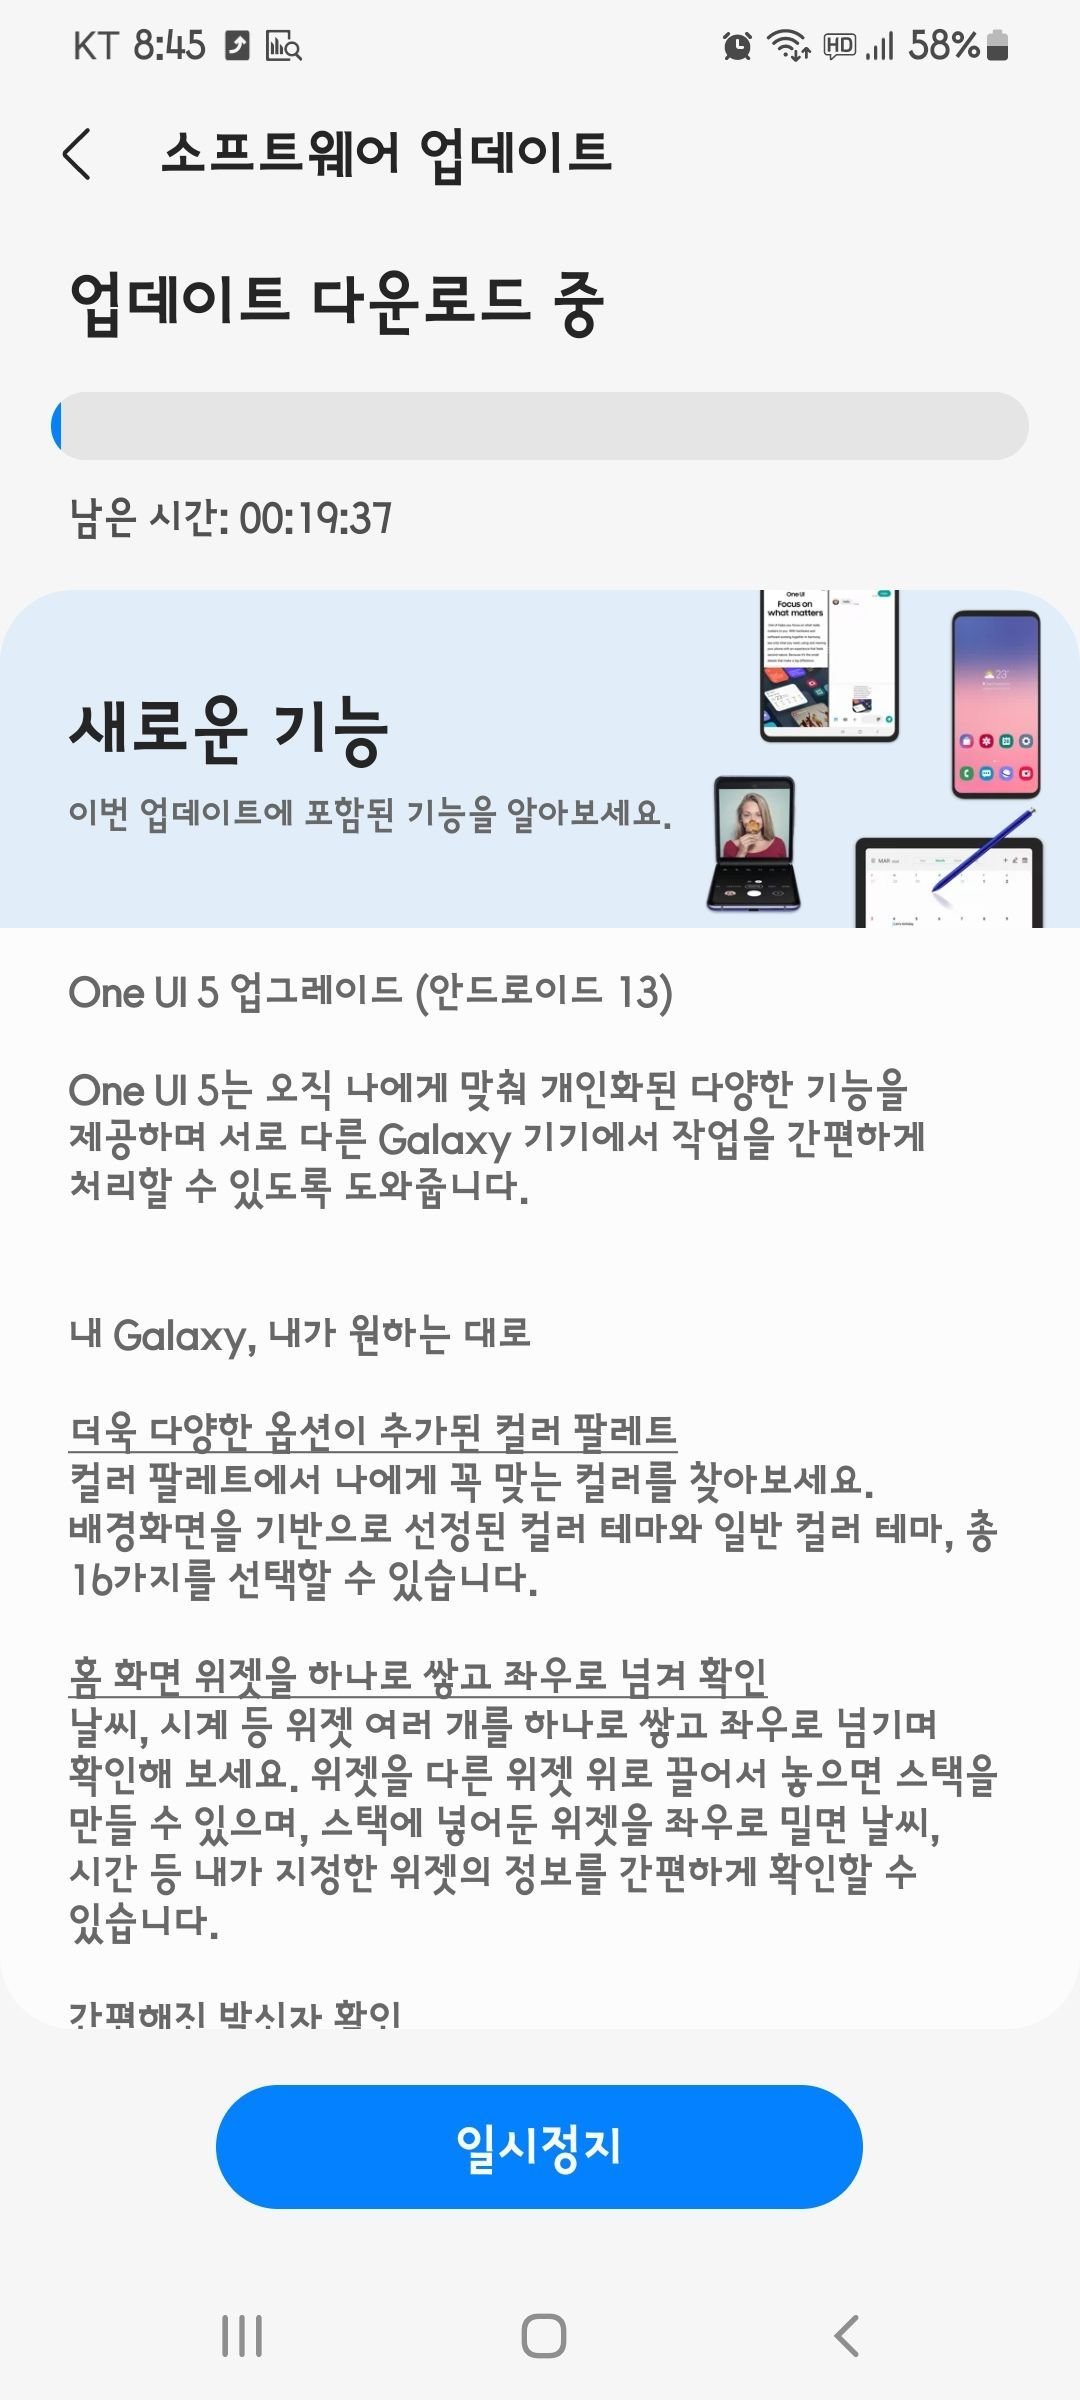 Samsung Galaxy S21 Ultra One UI 5.0 Beta Update Changelog